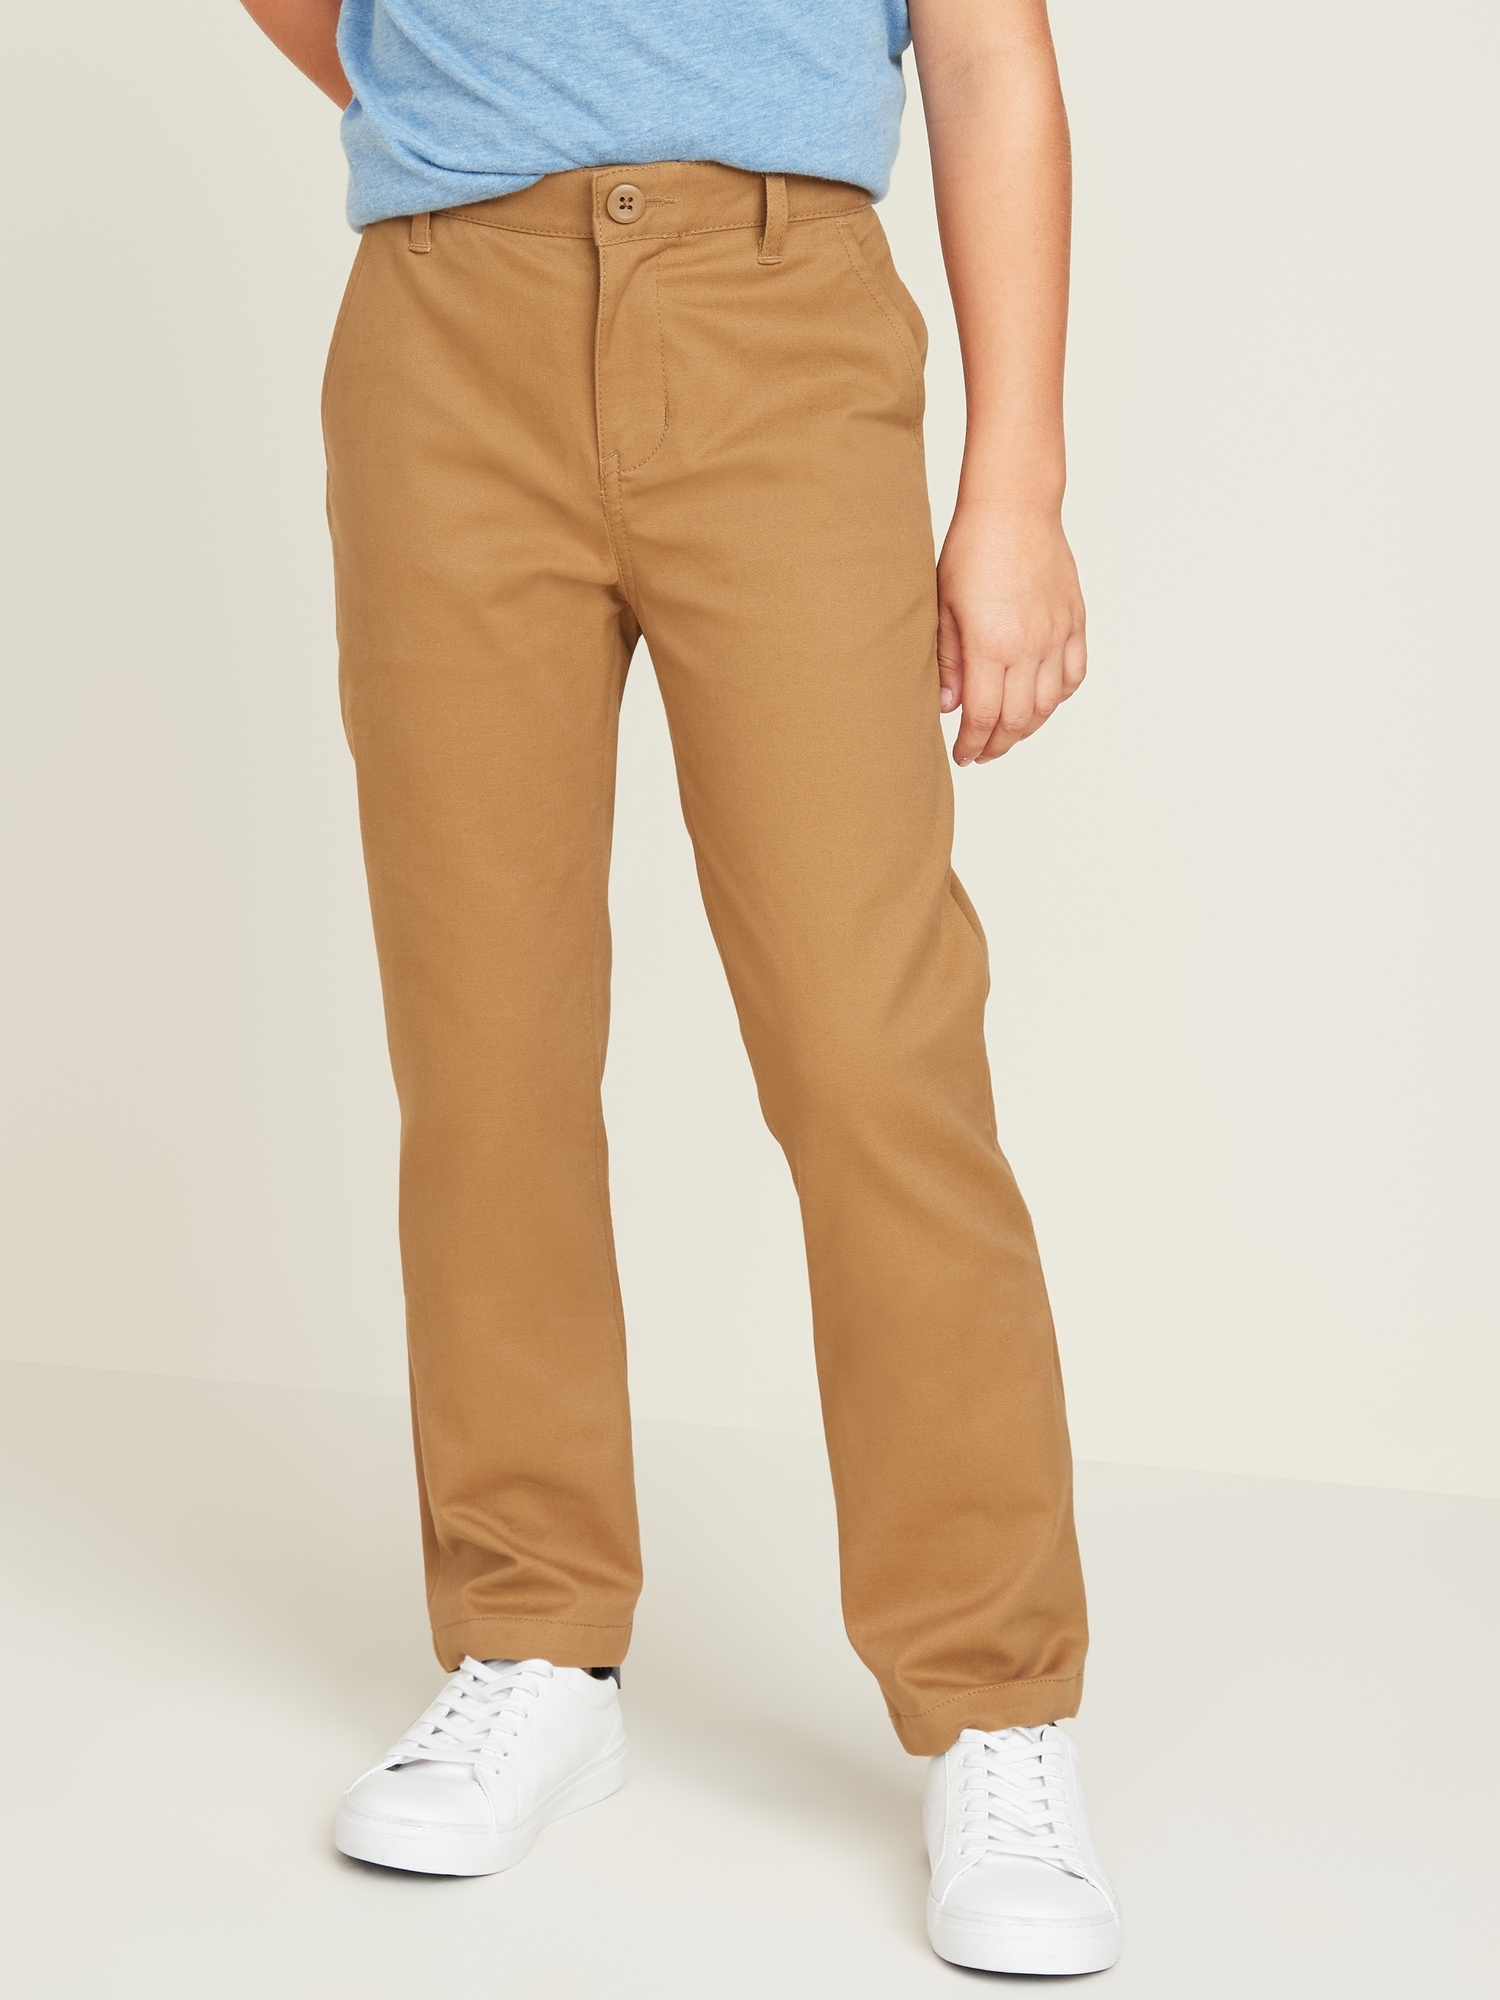 Old Navy Girls Uniform Light Brown Skinny Pants Size 14